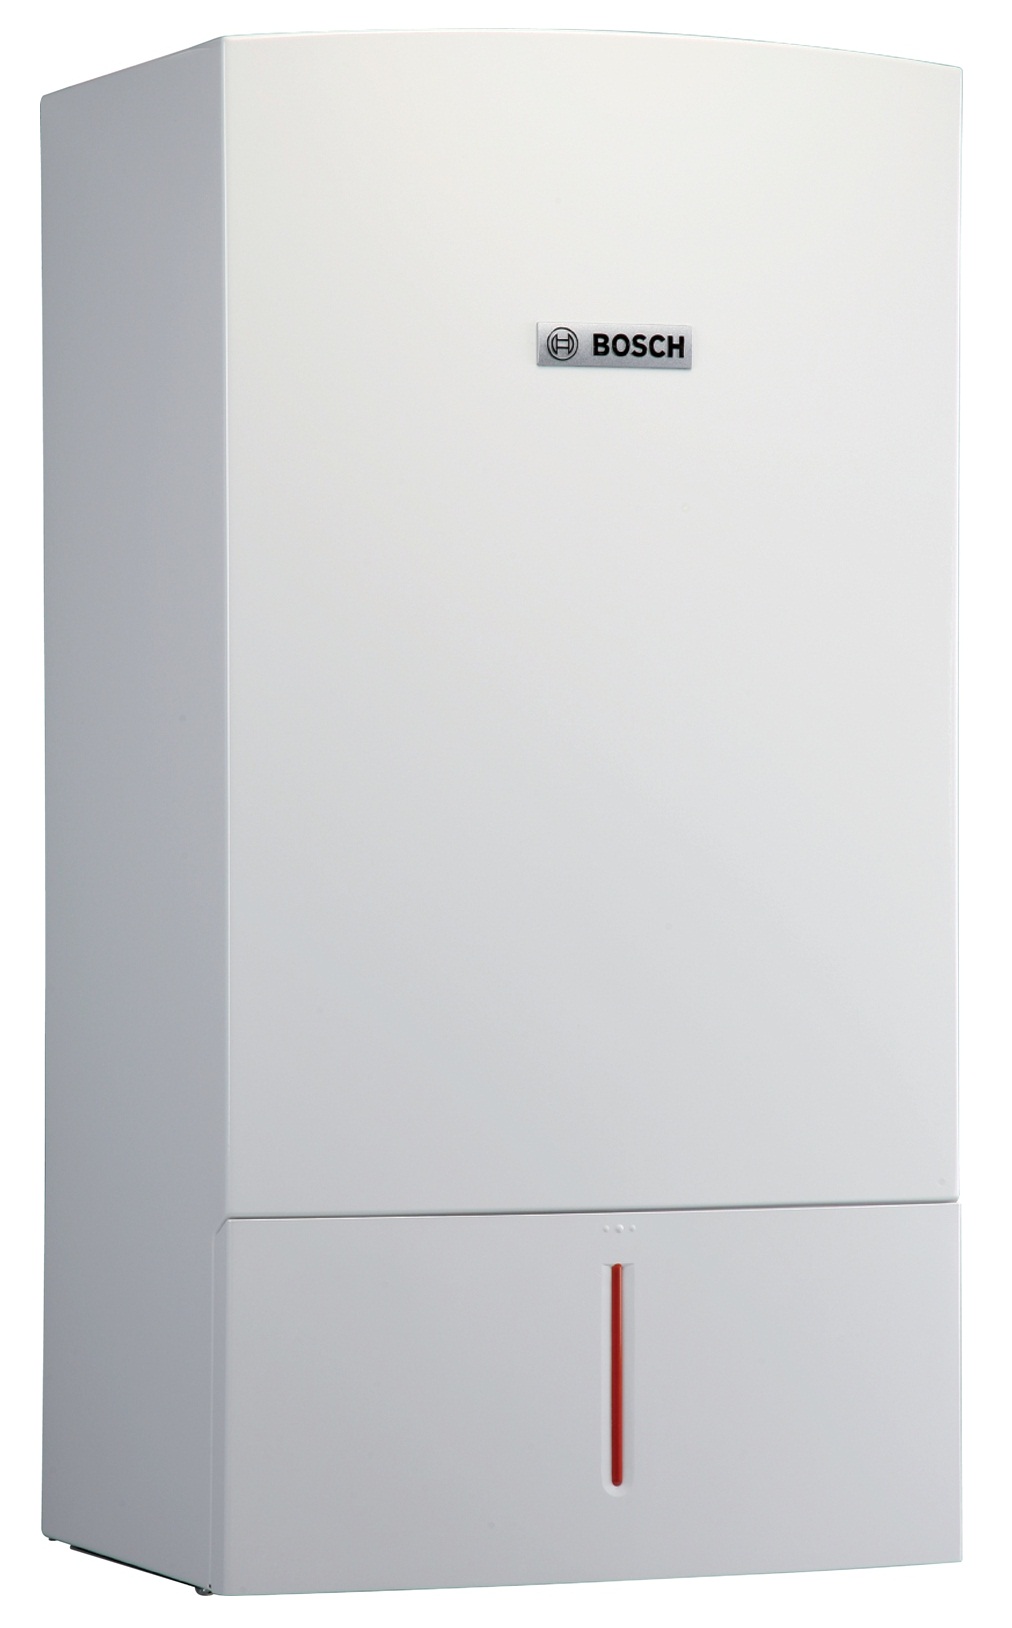 На фото изображен газовый котел Bosch Condens 7000 W ZBR 42-3 A